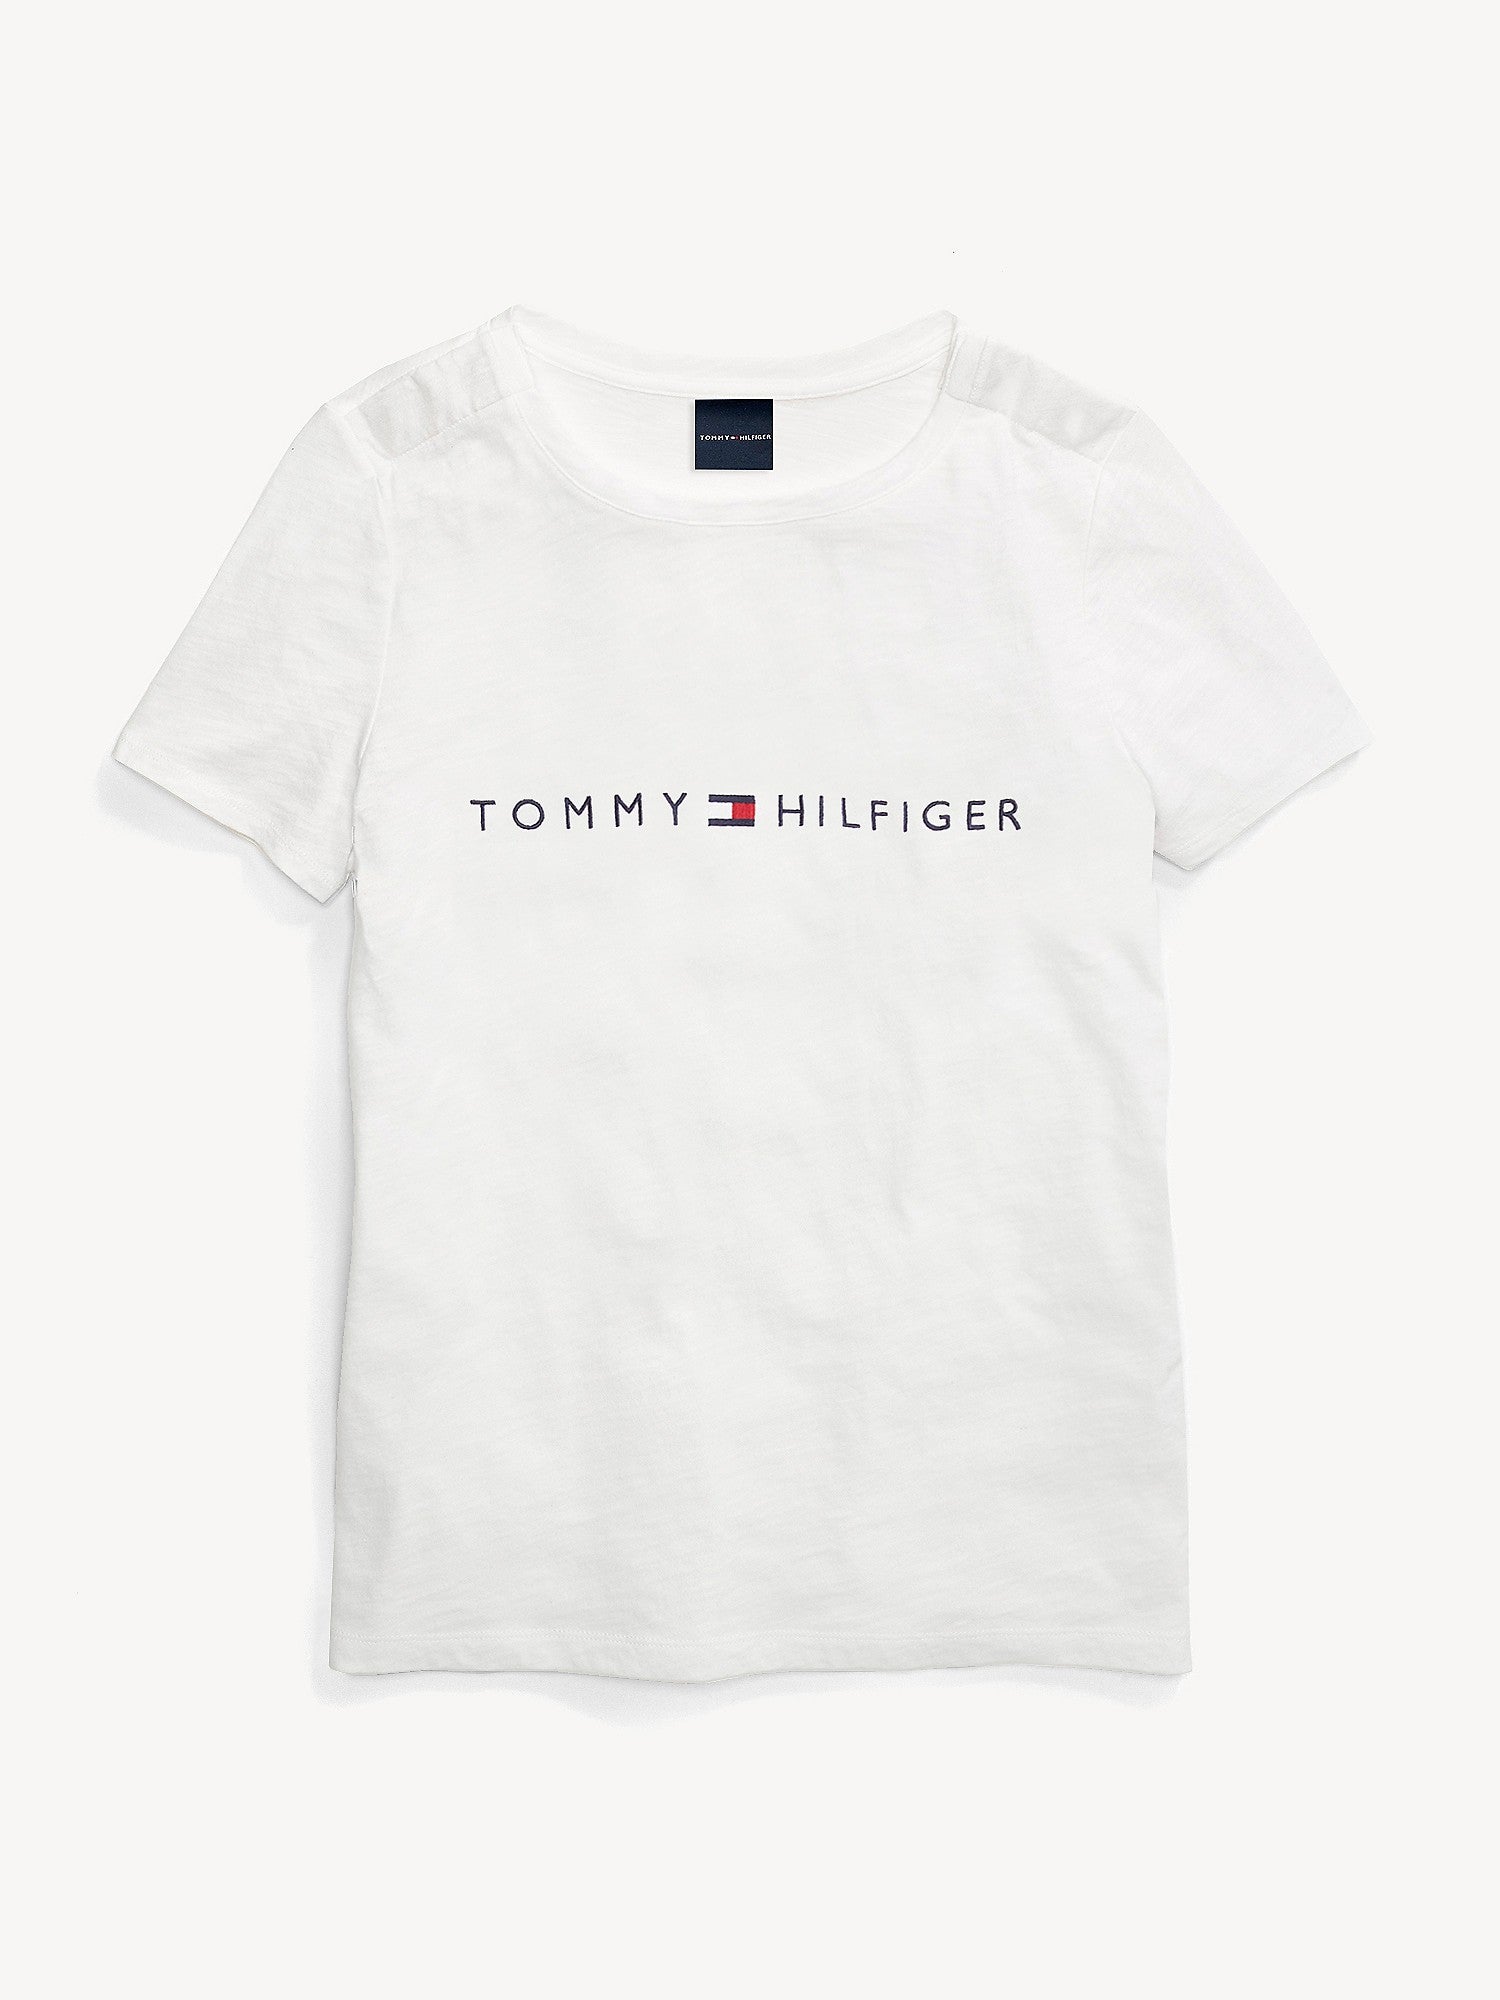 Tommy Hilfiger T-Shirt - White